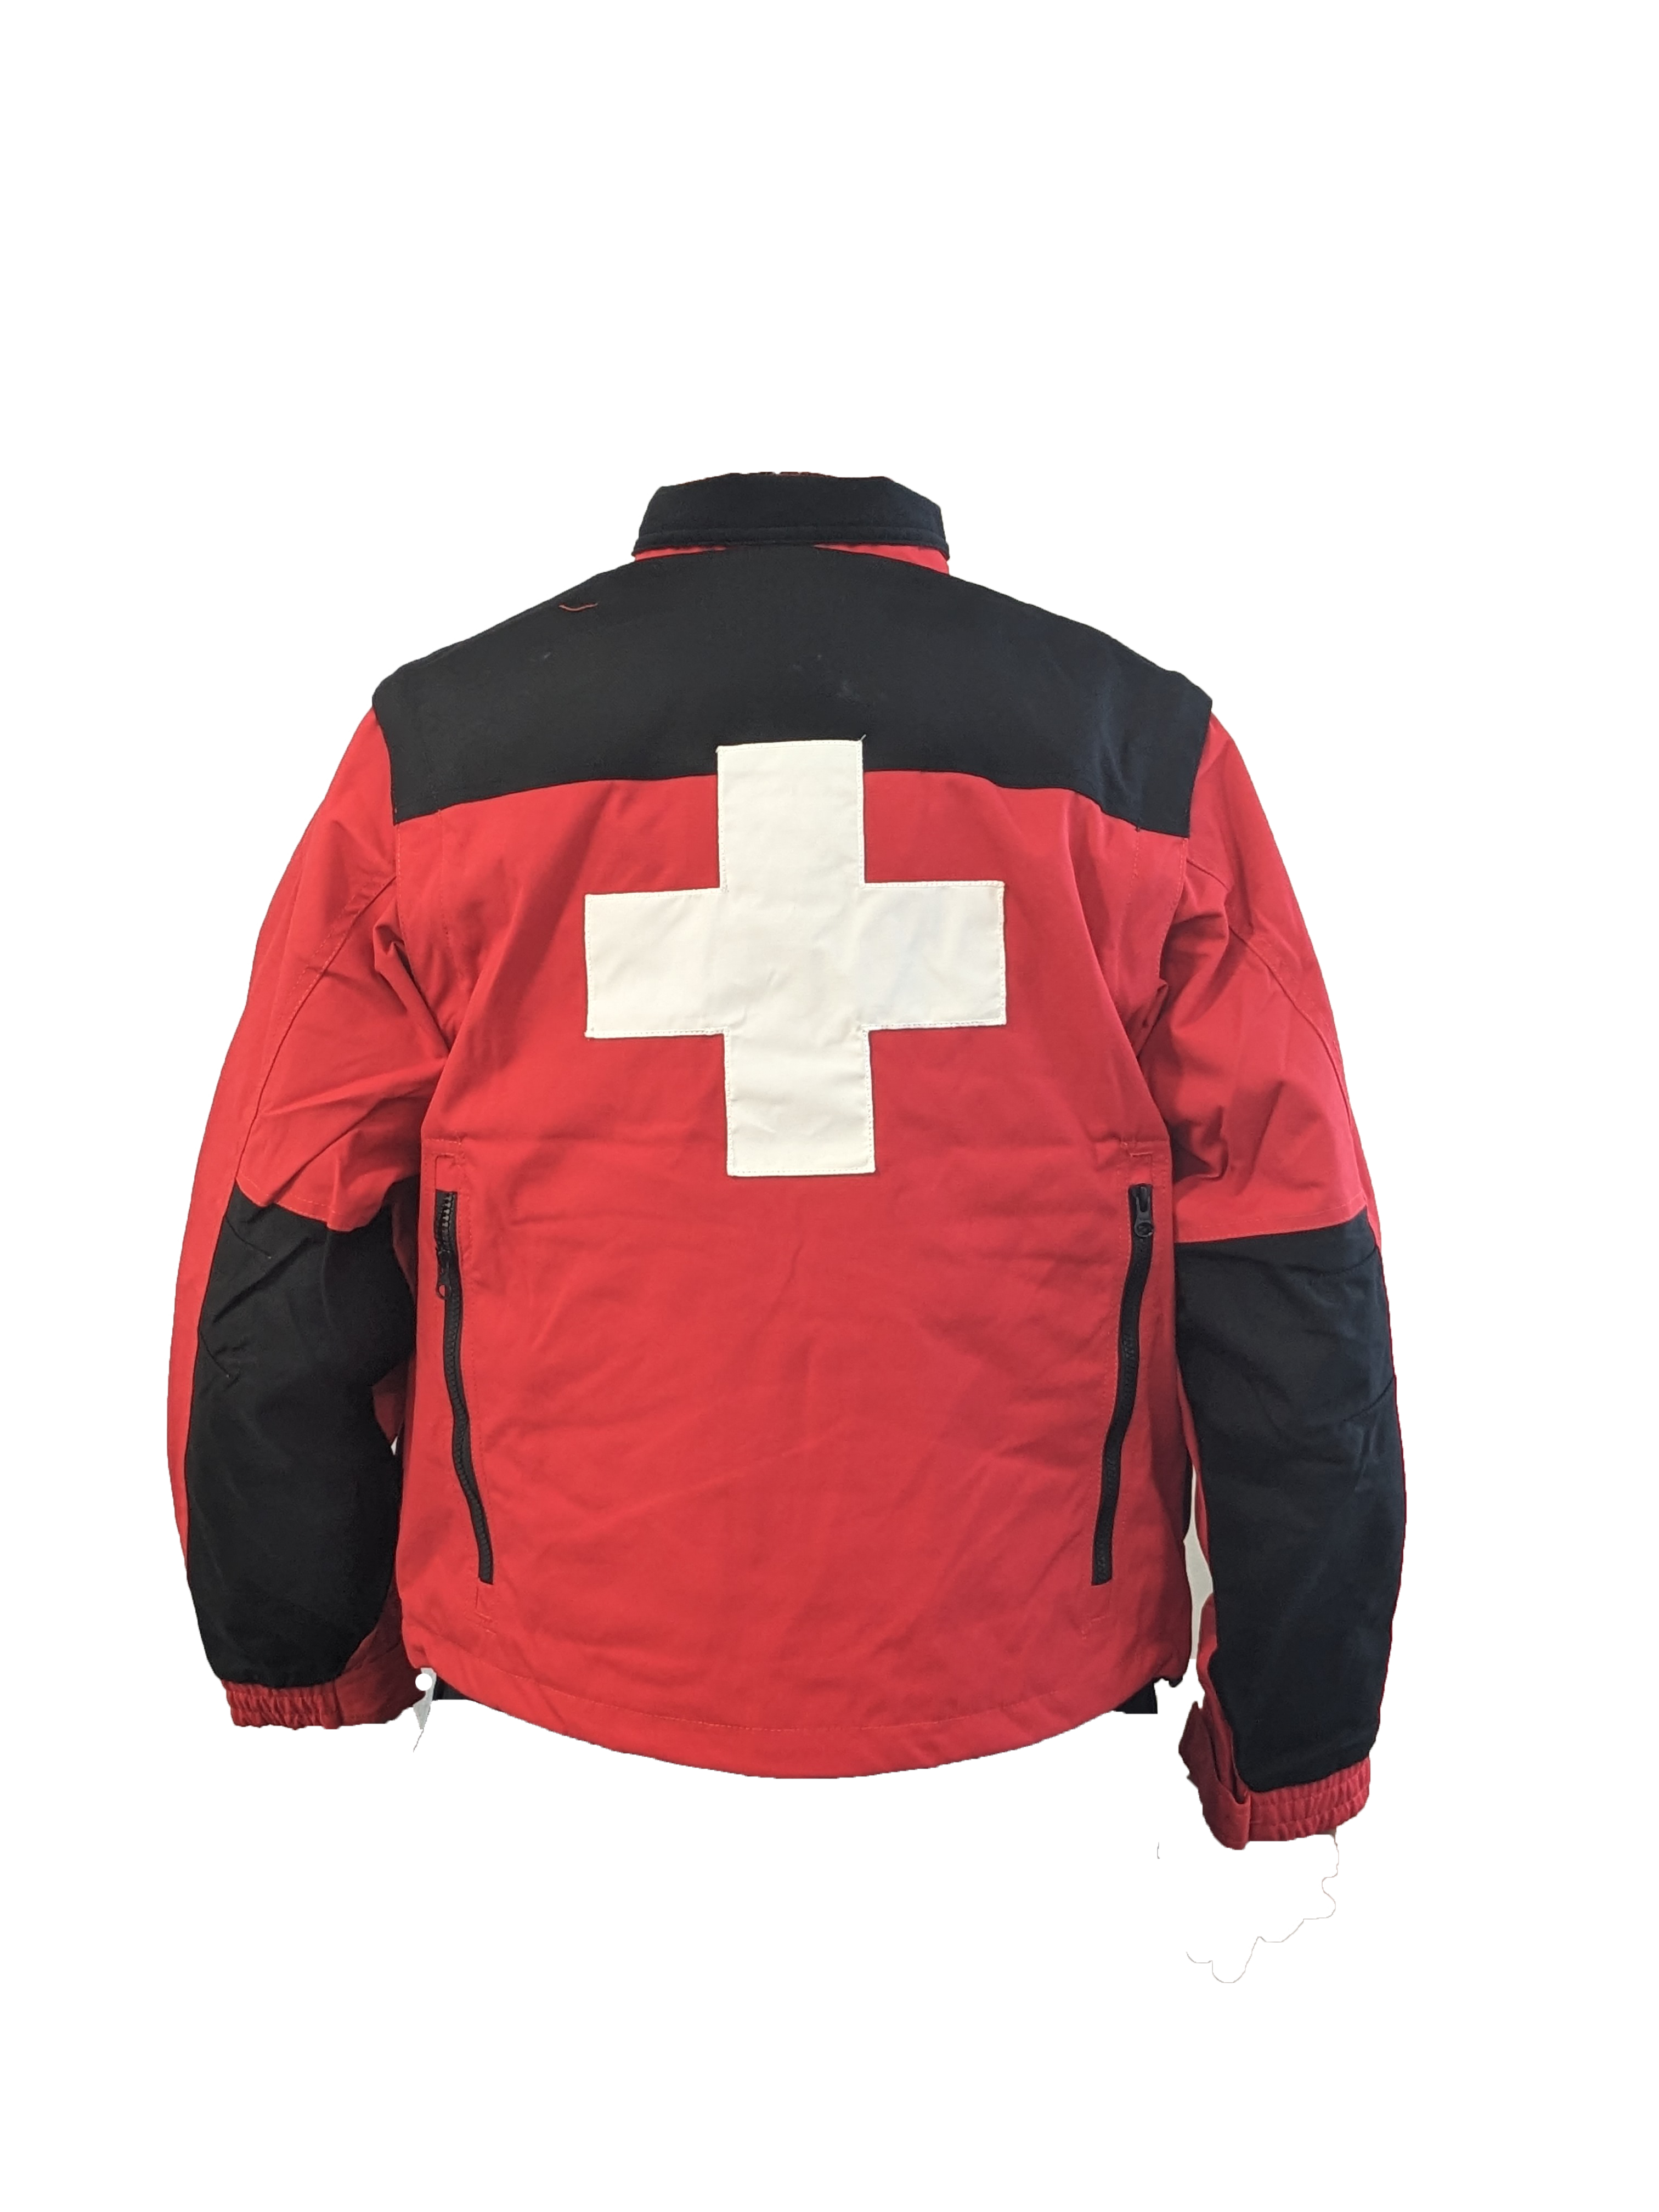 Rescue Jacket, Red/Black w/Crosses, w/zip-off sleeves & Shock Cord Waist